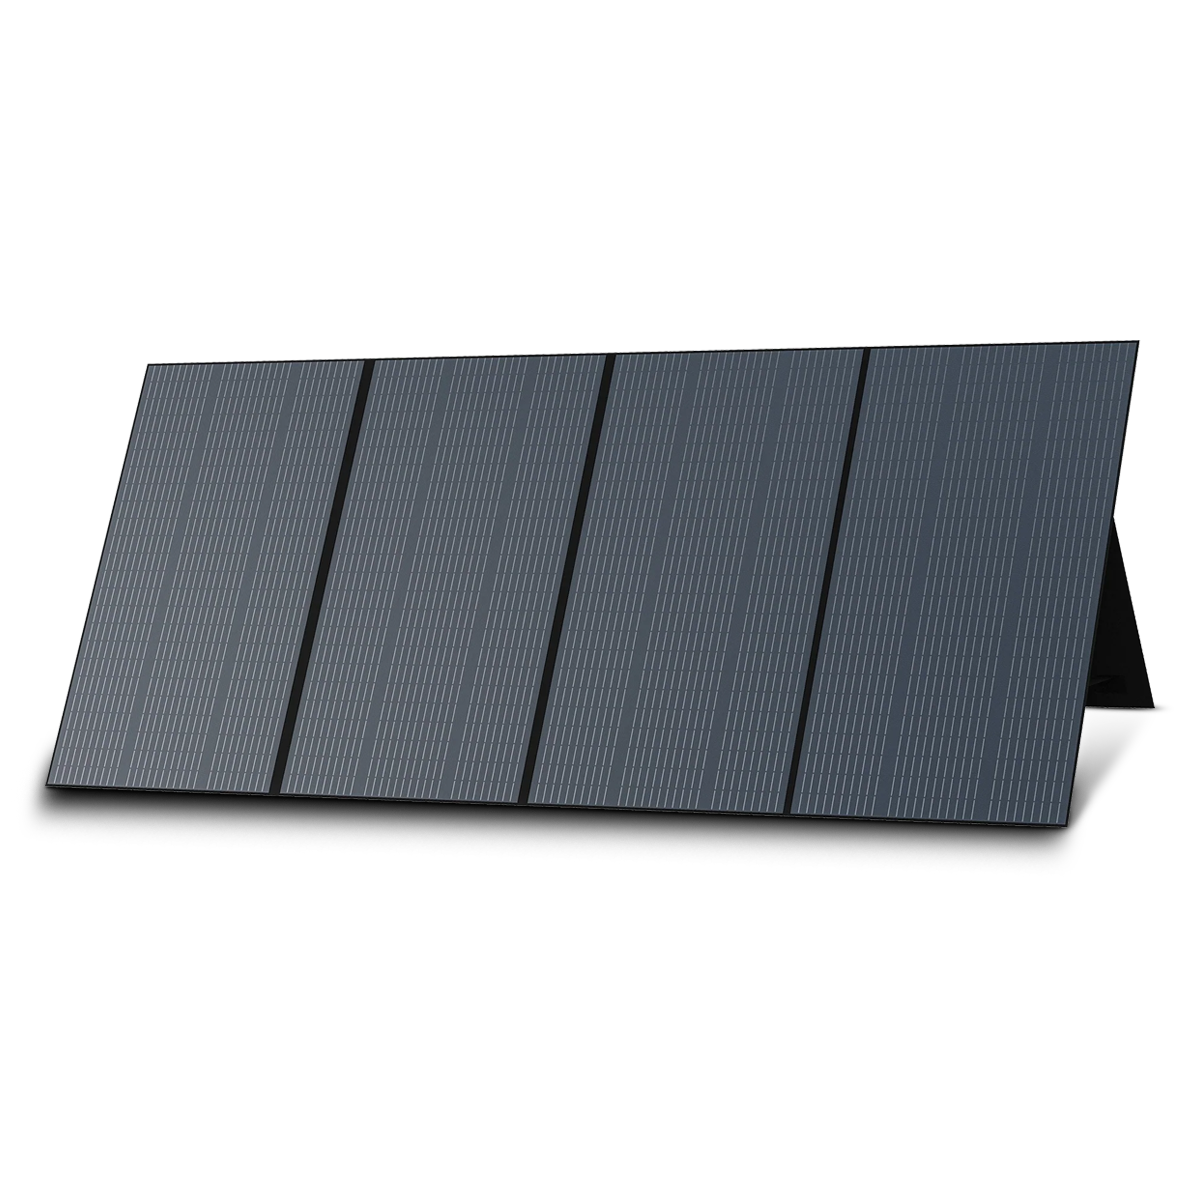 Bluetti PV350 solar panel by PSW Energy